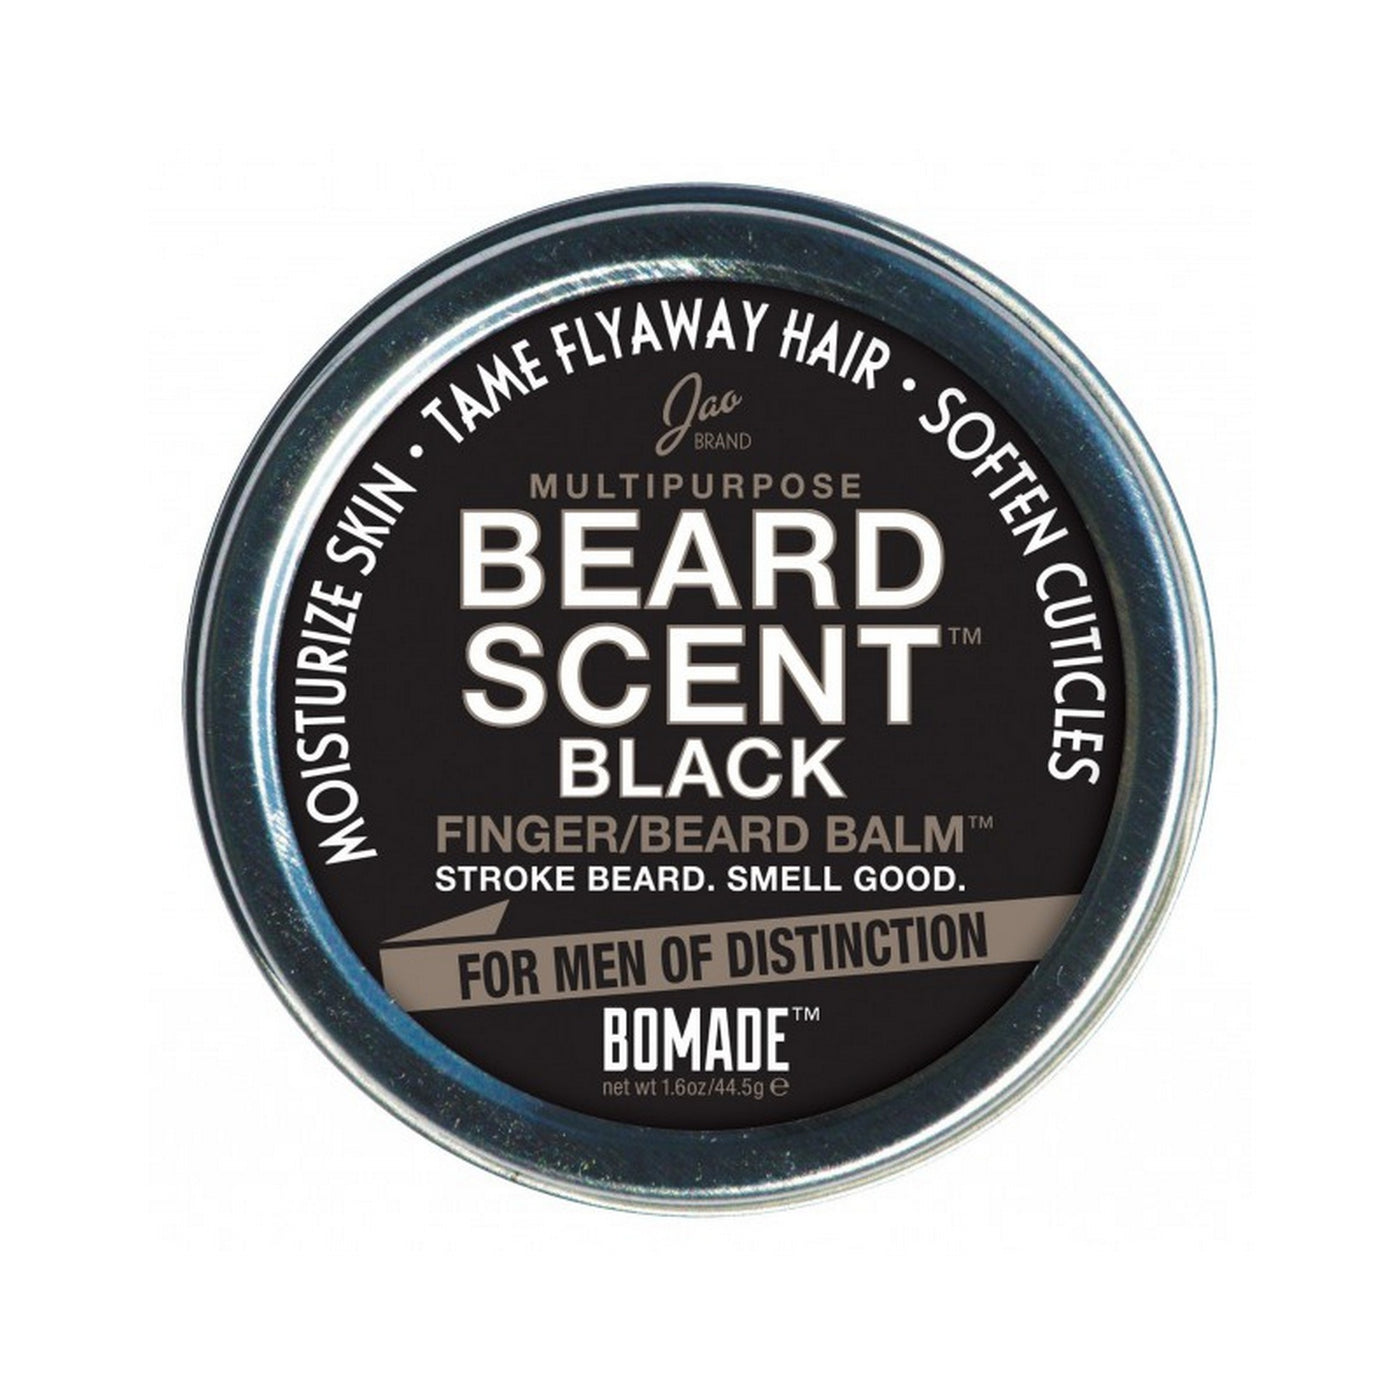 Jao Brand 100% Natural Beard Scent Black Bomade